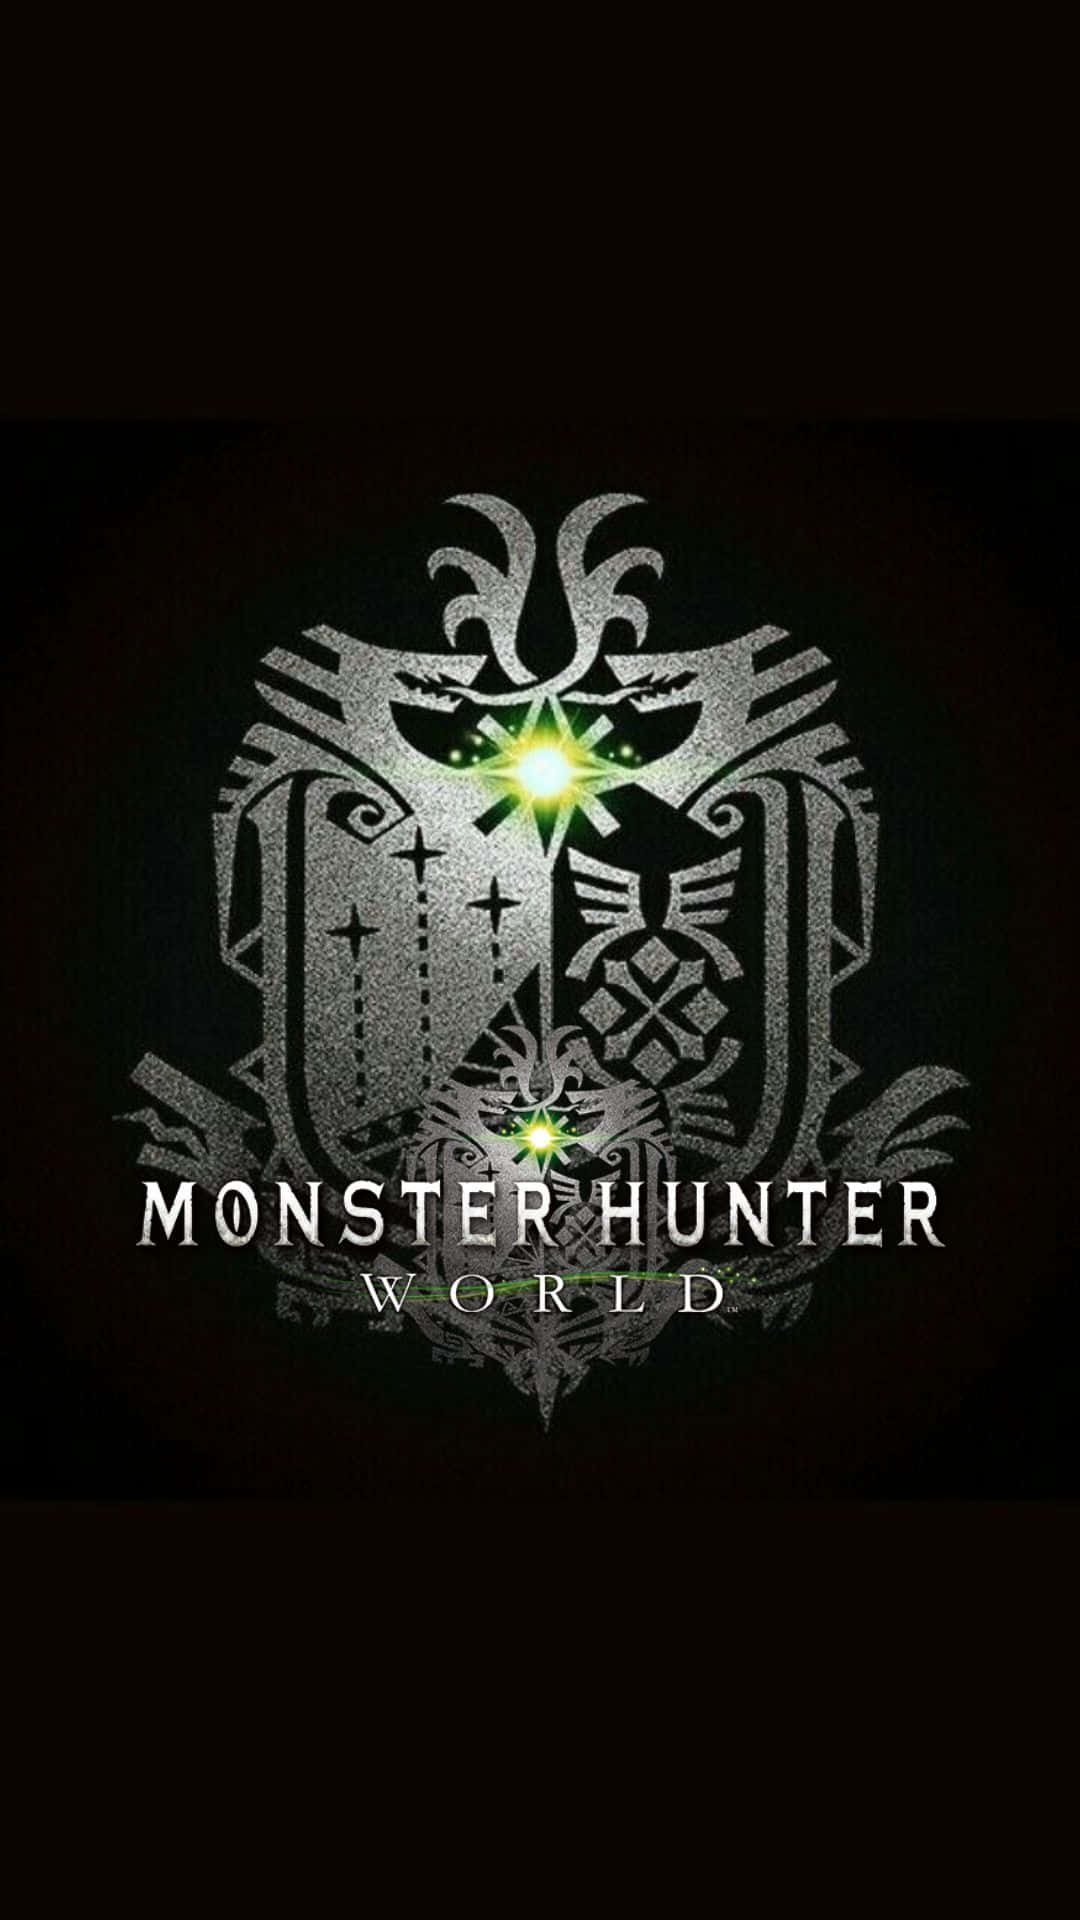 Affrontaavventure Epiche Con Android Monster Hunter World